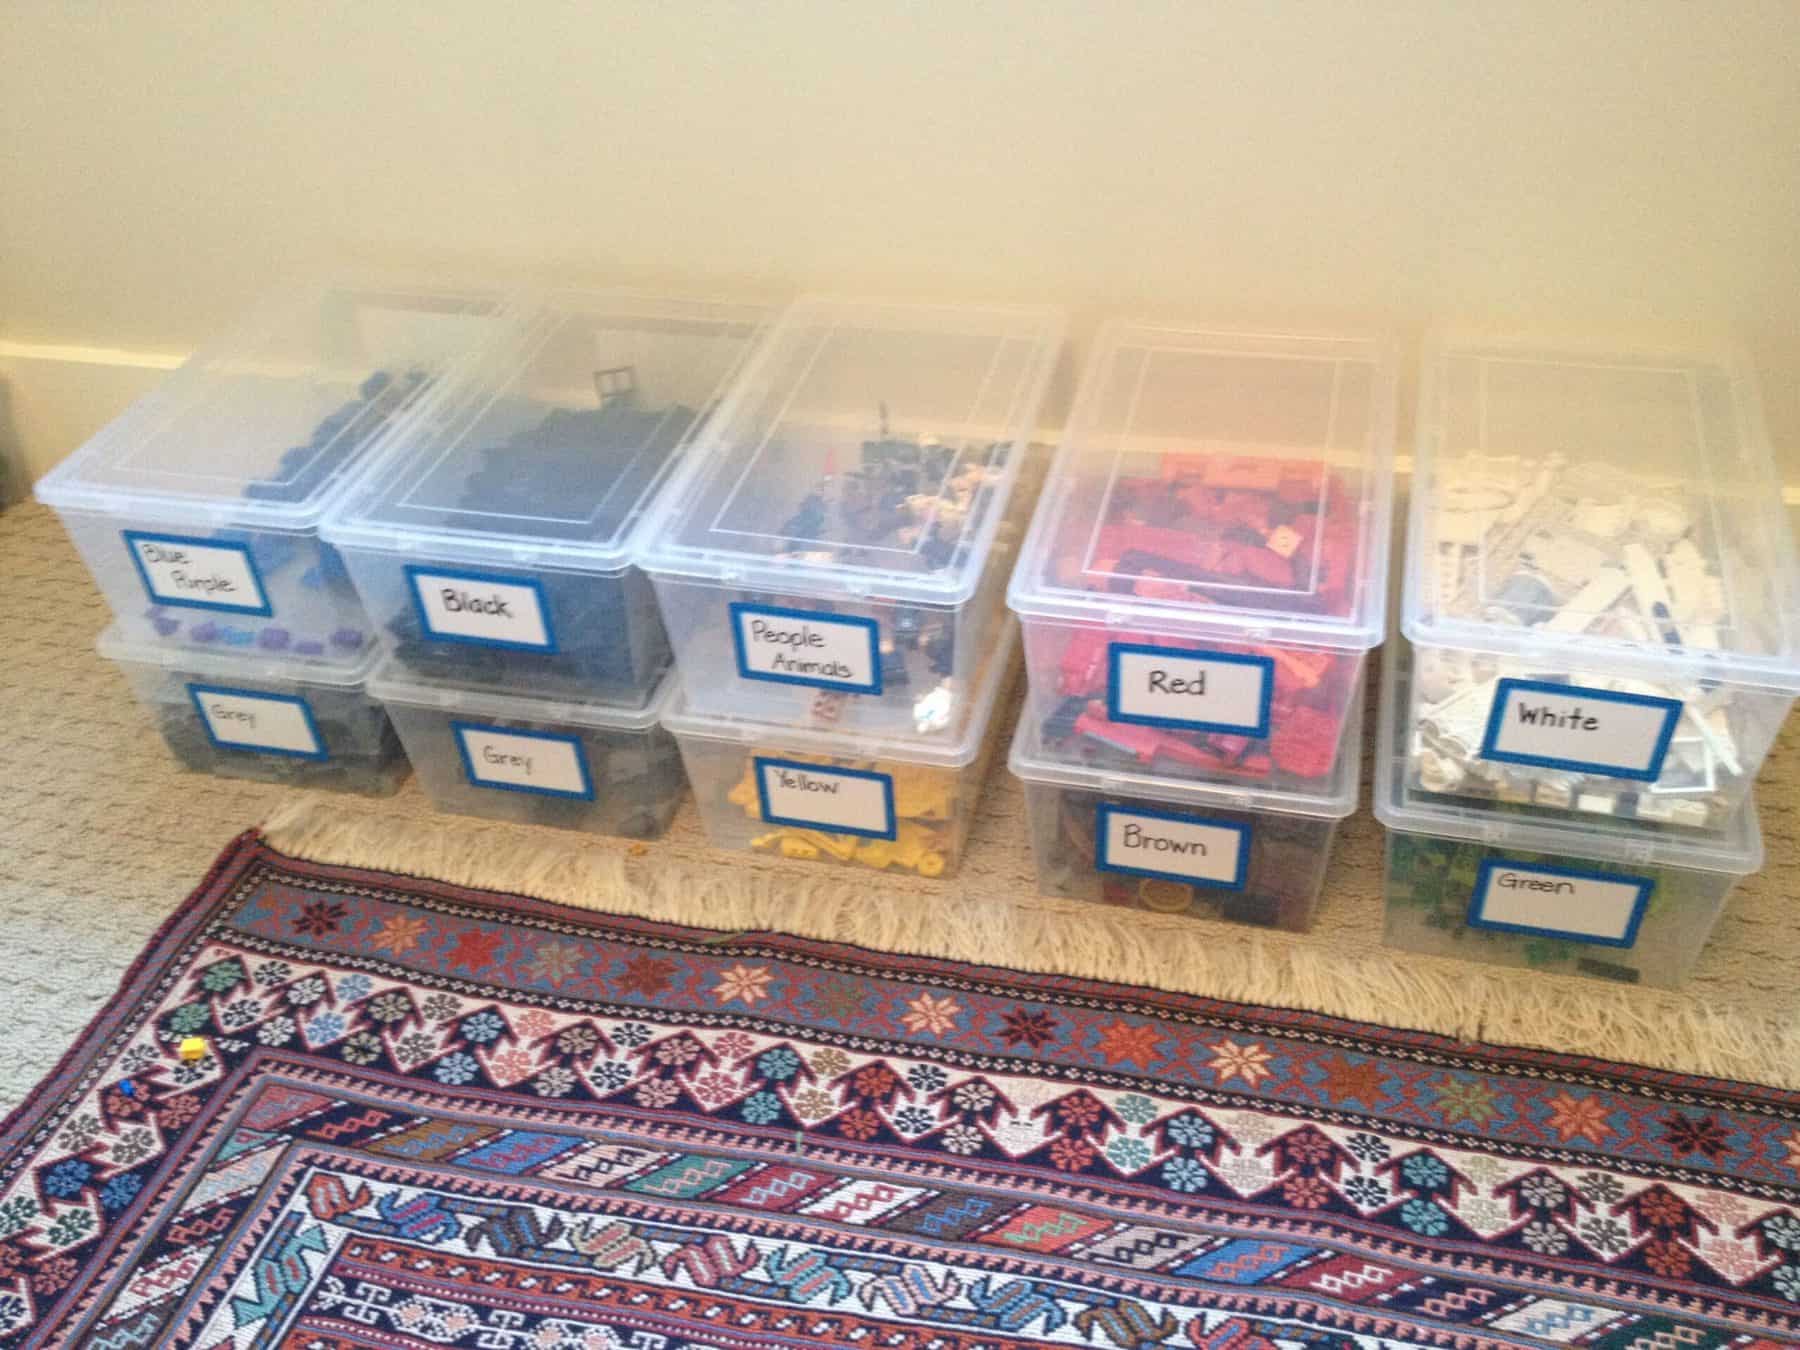 Getting organized with the best LEGO storage ideas